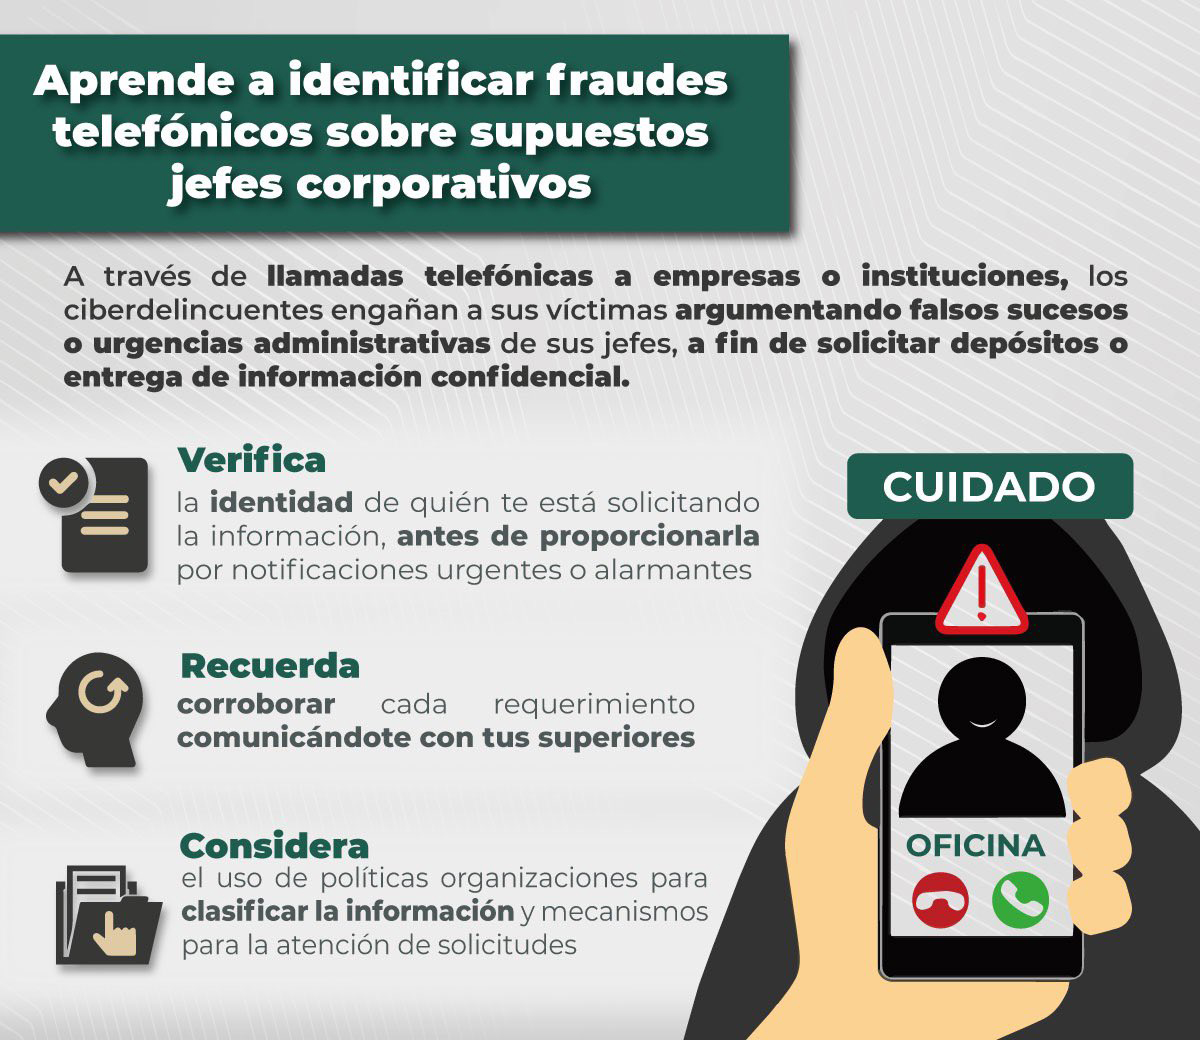 /cms/uploads/image/file/865795/Fraudes_telefonicos__sobre_supuestos_jefes_corporativos.jpeg